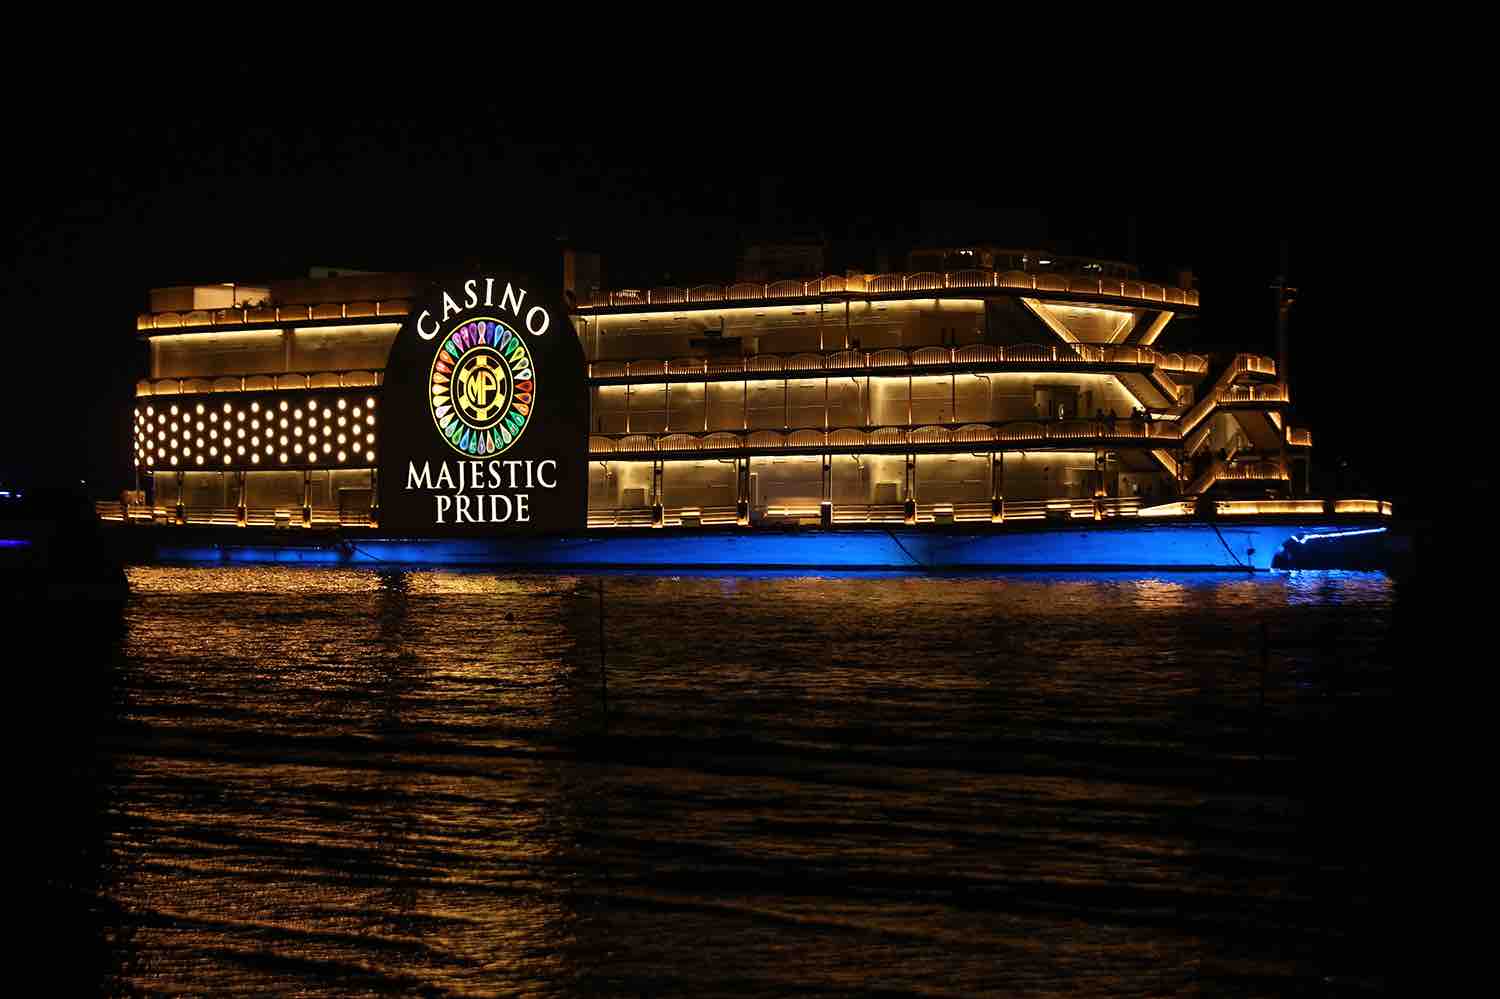 majestic-pride-casino-boat.jpg